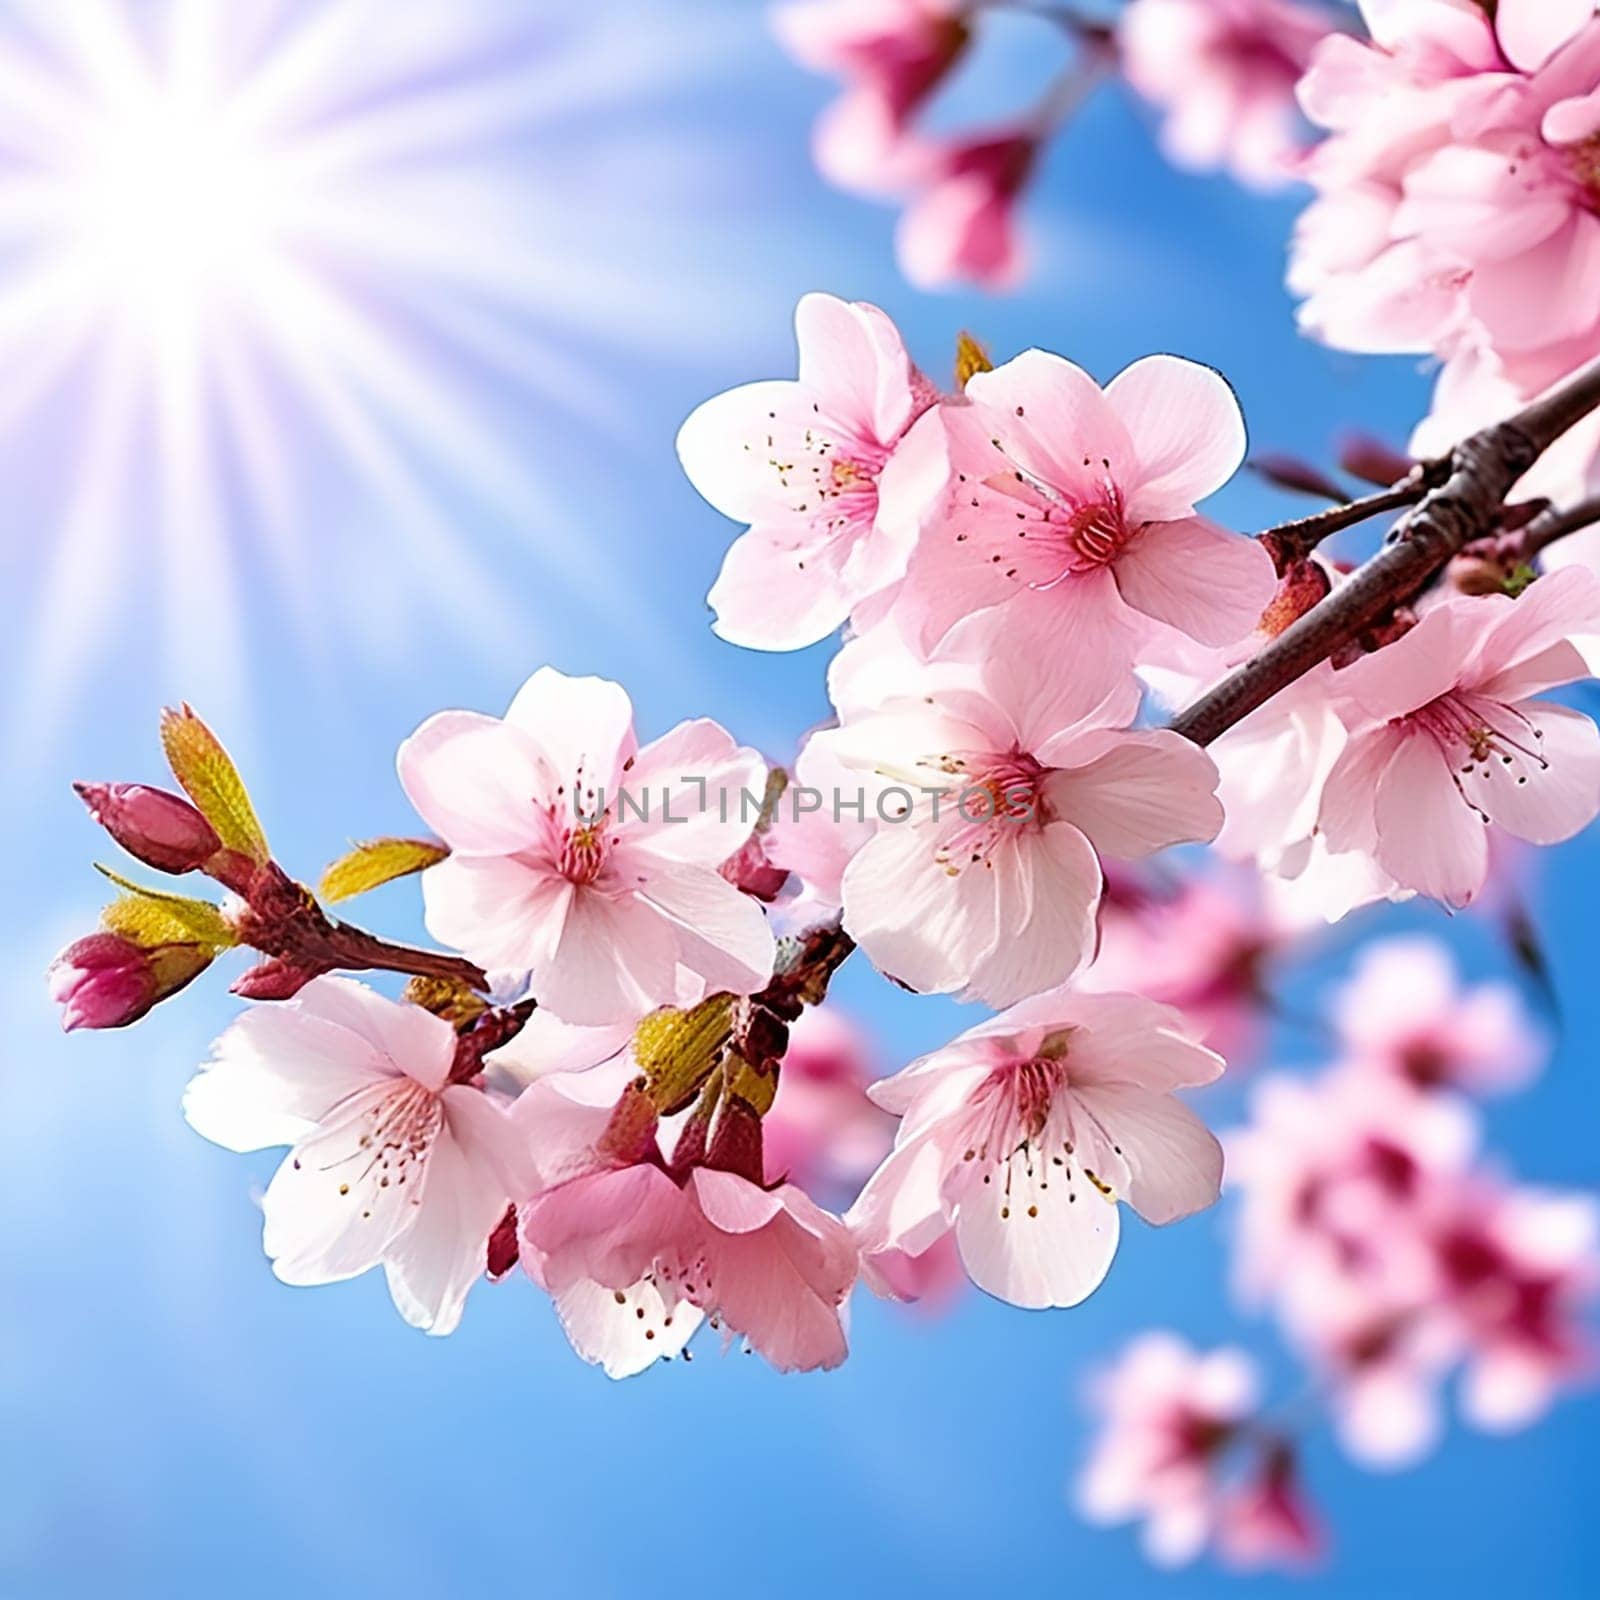 Elegant Awakening: Sakura Blossom Spring Banner with Delicate Cherry Blossoms by Petrichor